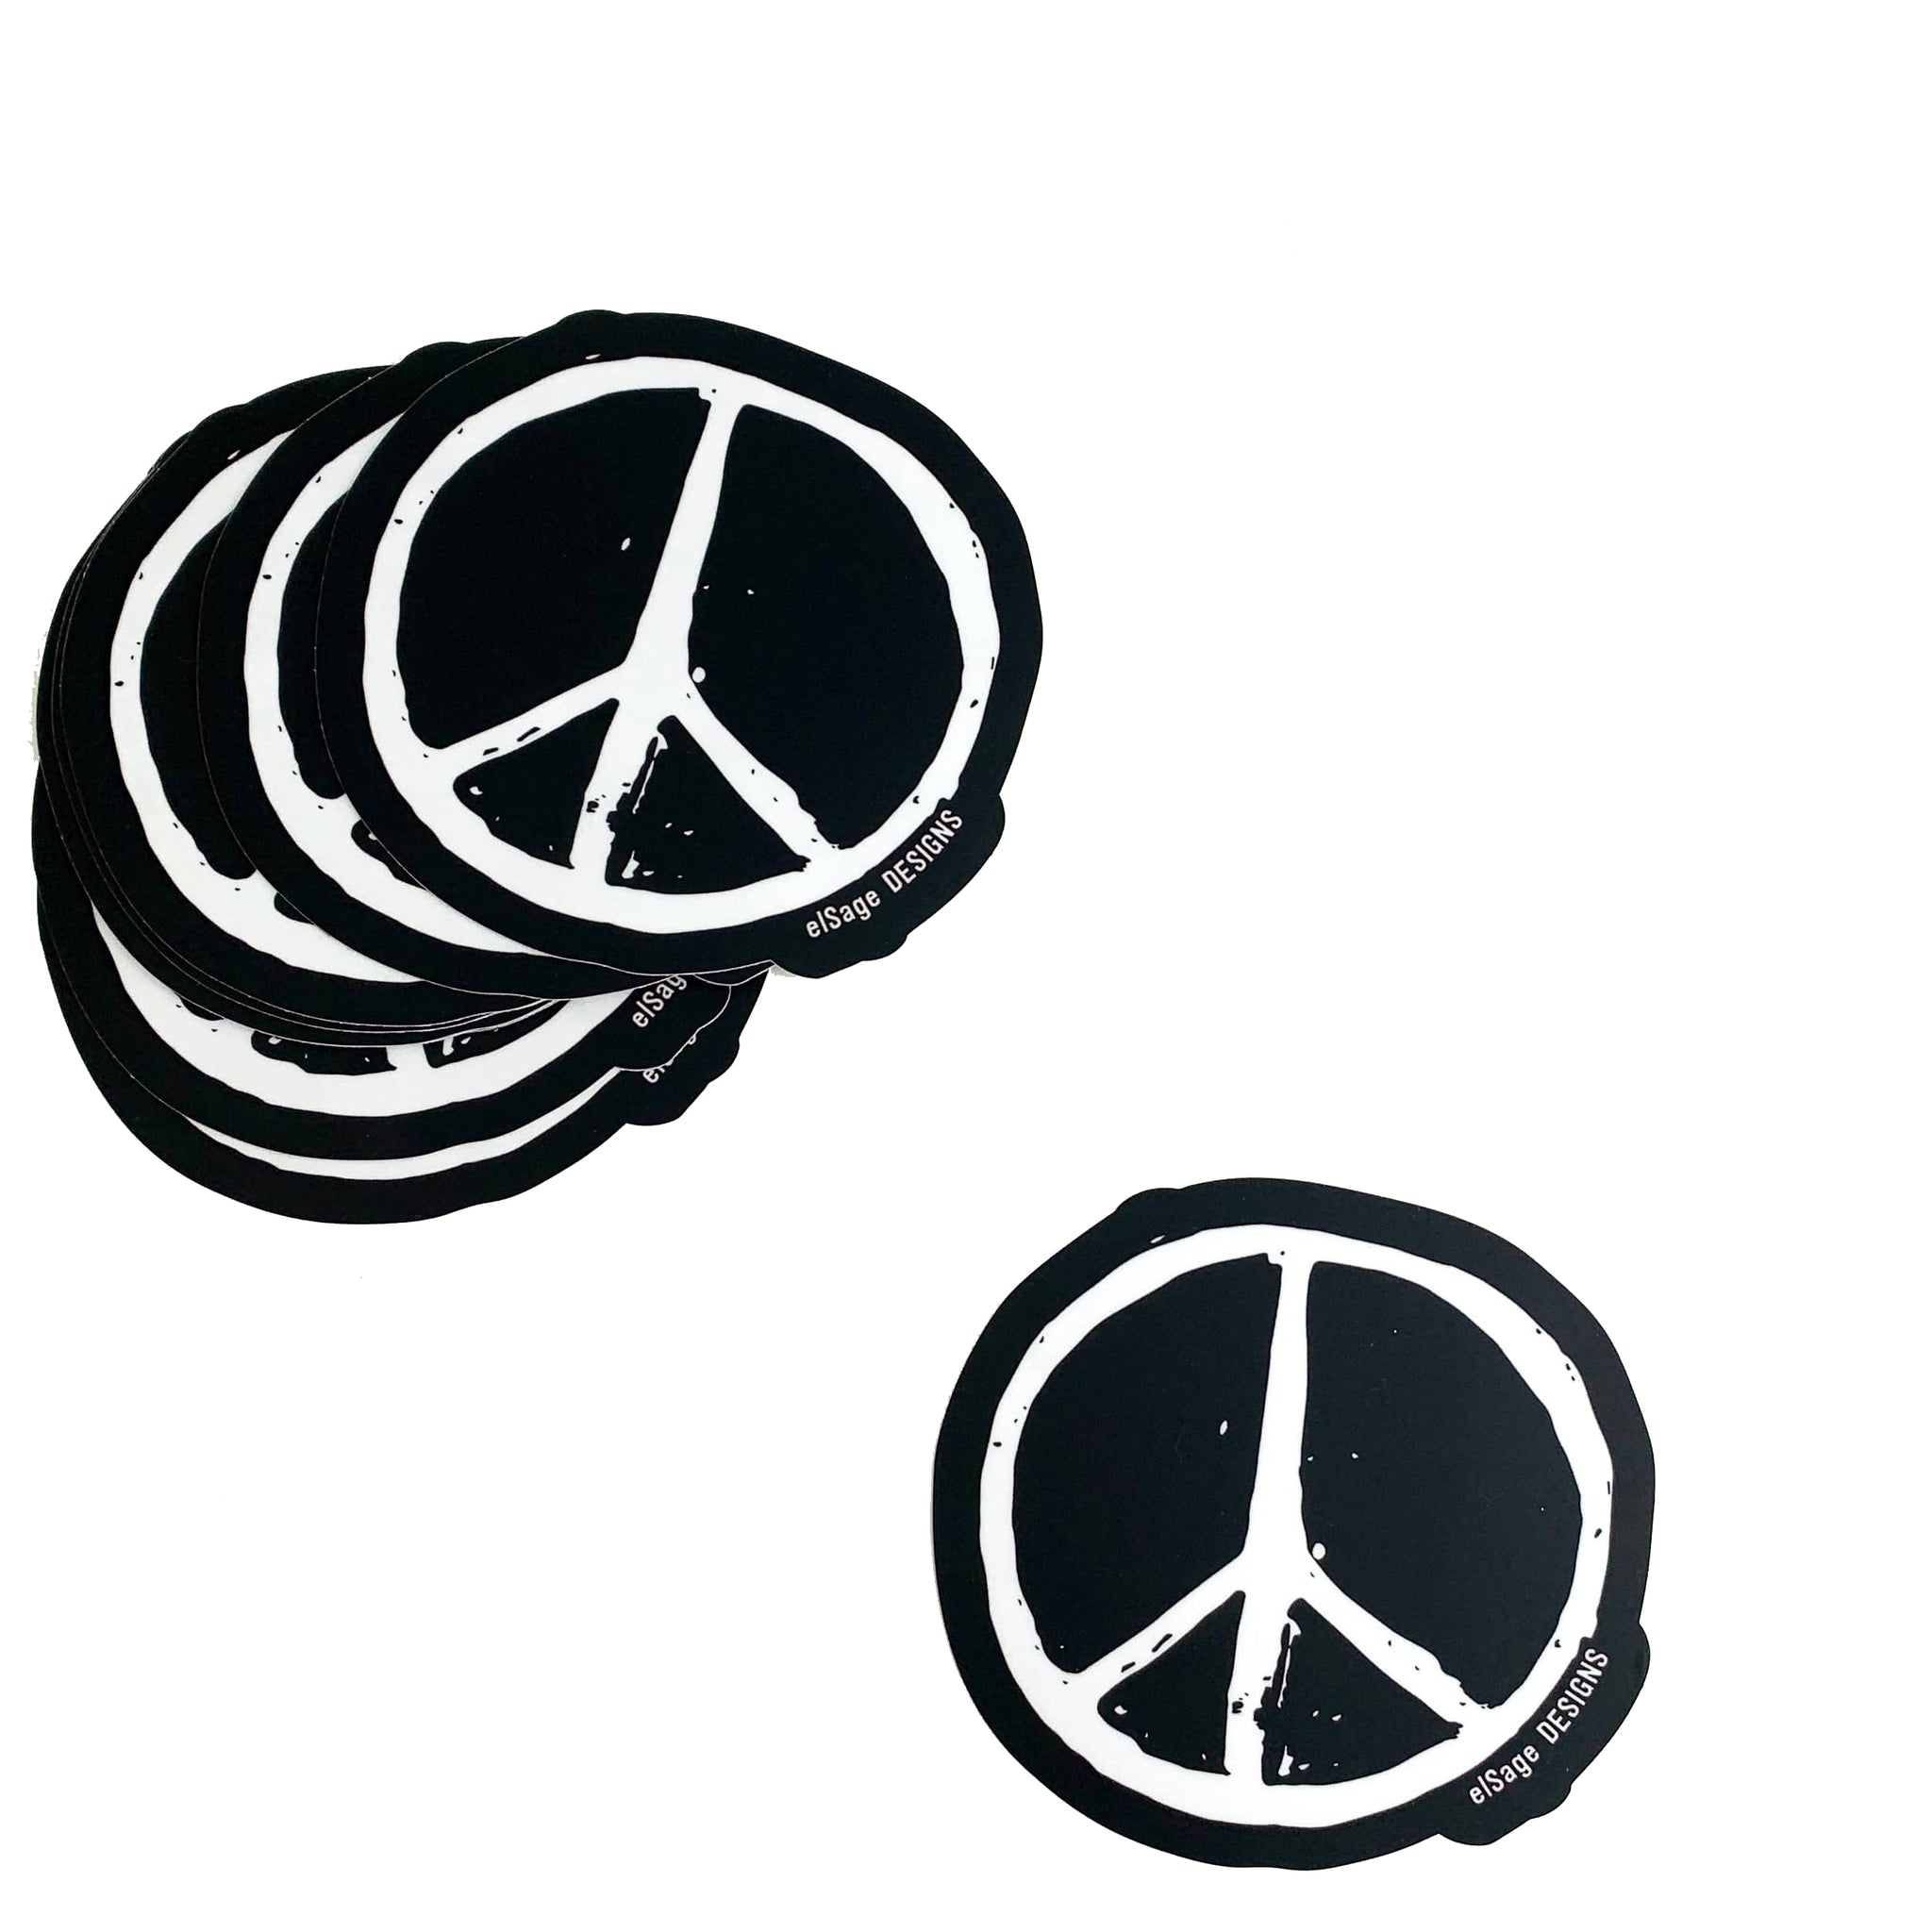 Peace Sticker in Black and White